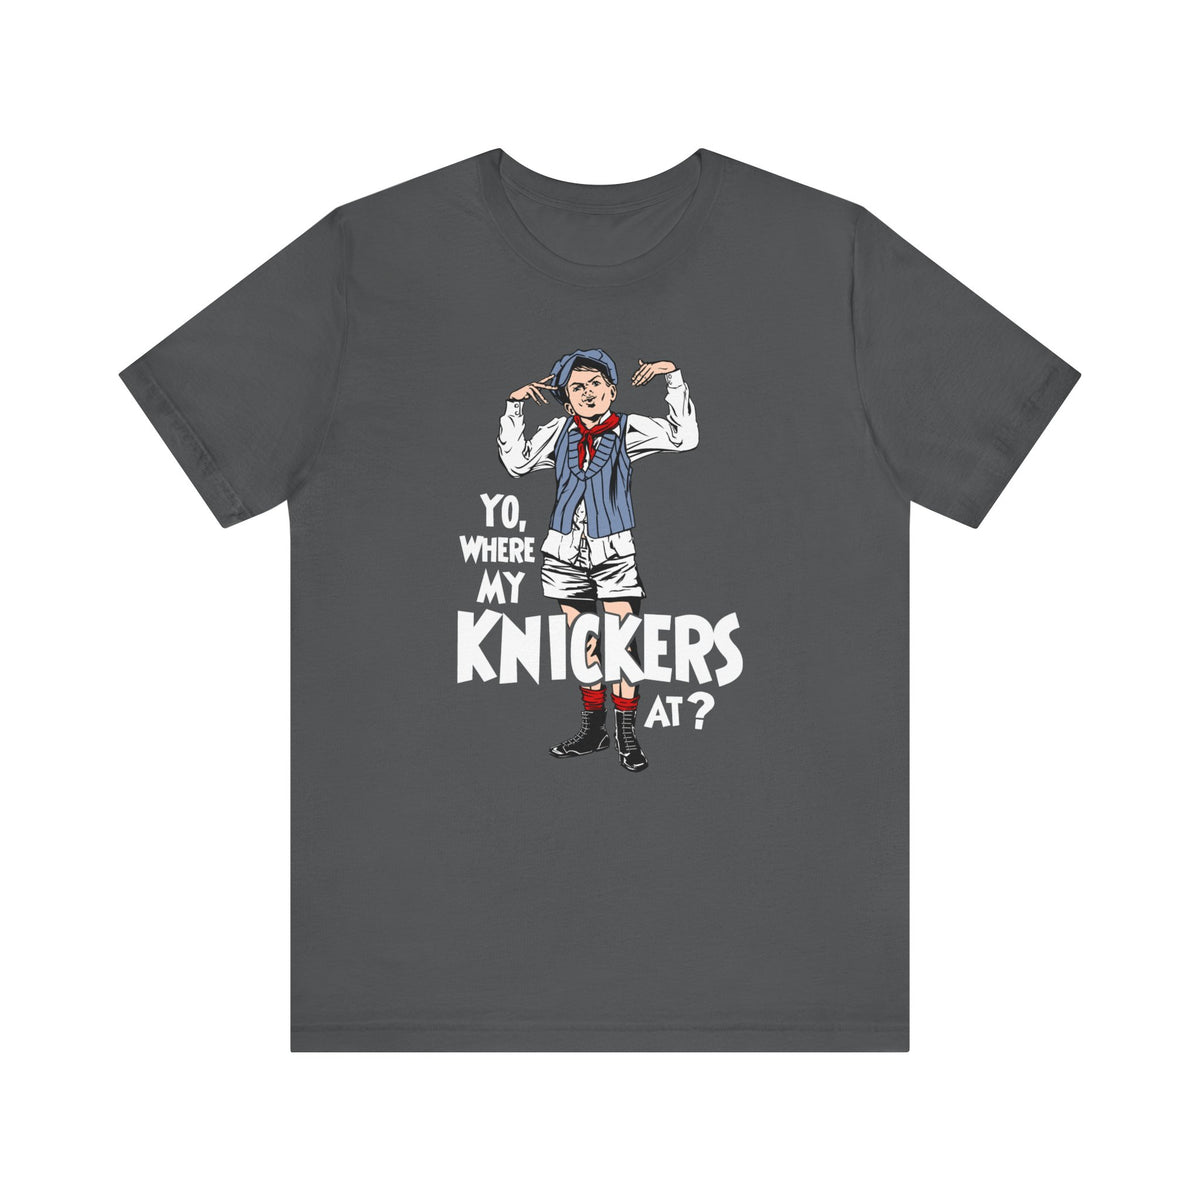 Yo Where My Knickers At? - Men's T-Shirt